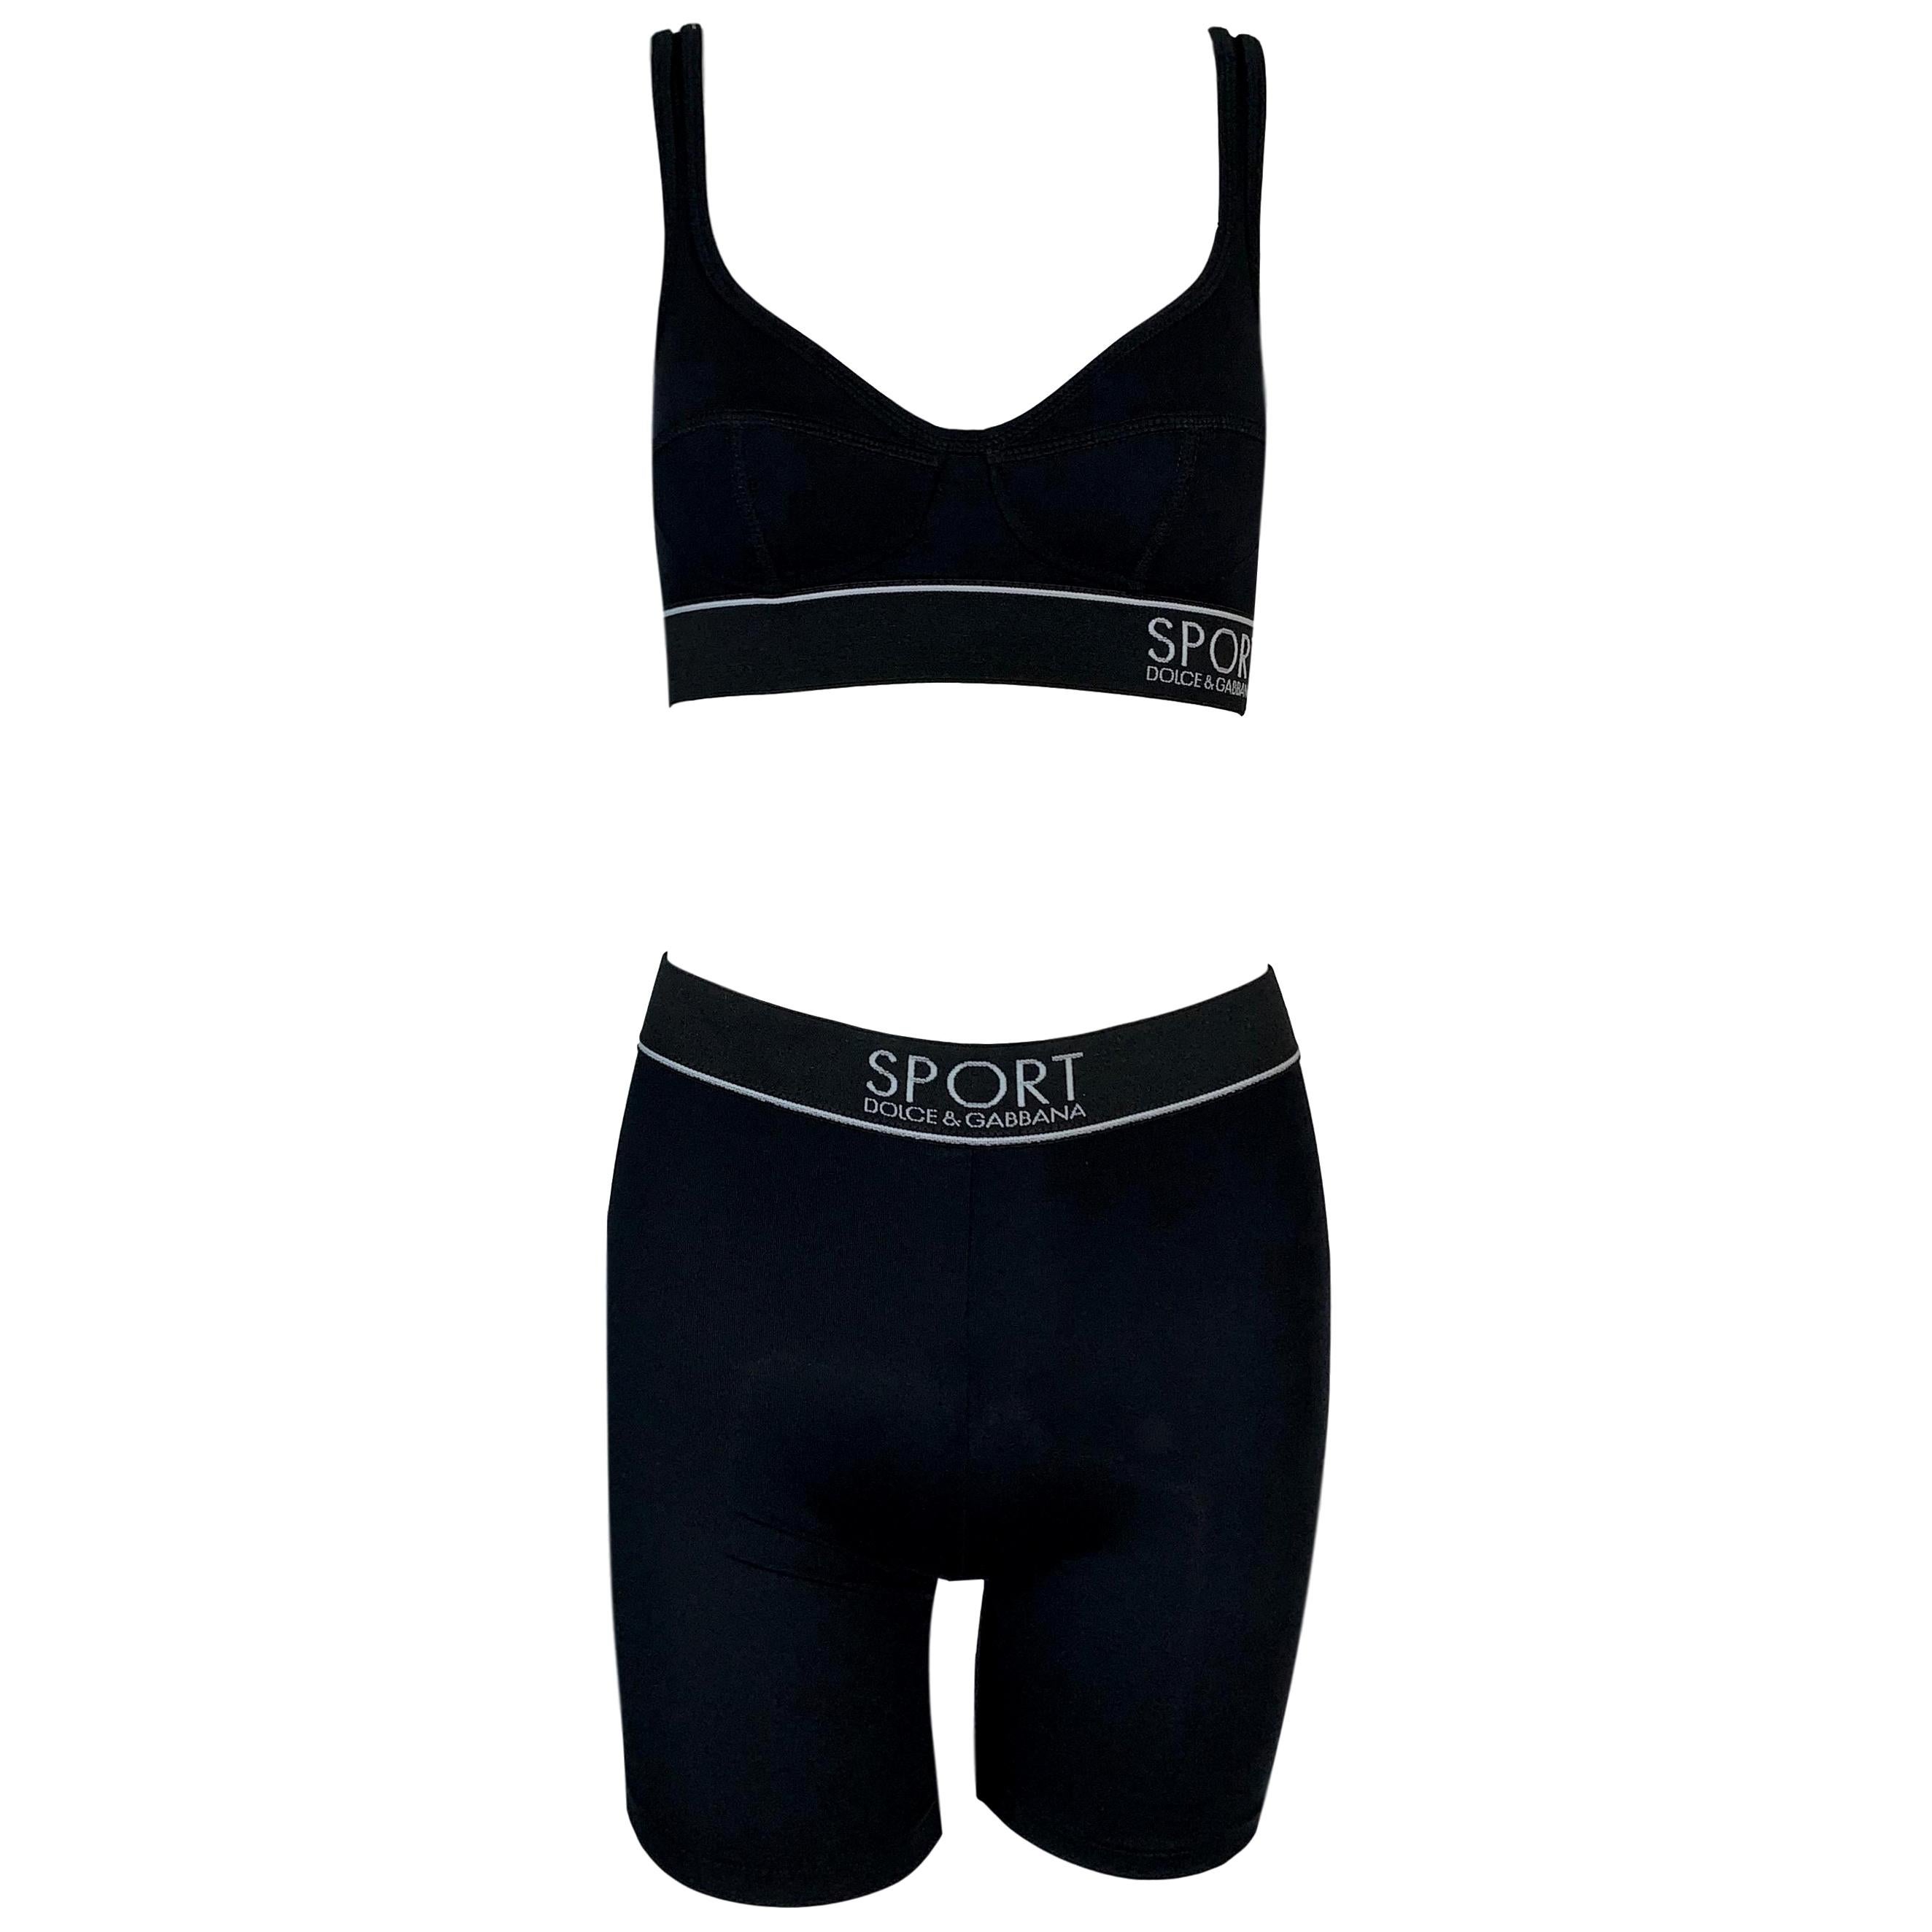 1990's Dolce & Gabbana Sport Black White Logo Crop Top Bra High Waist Shorts